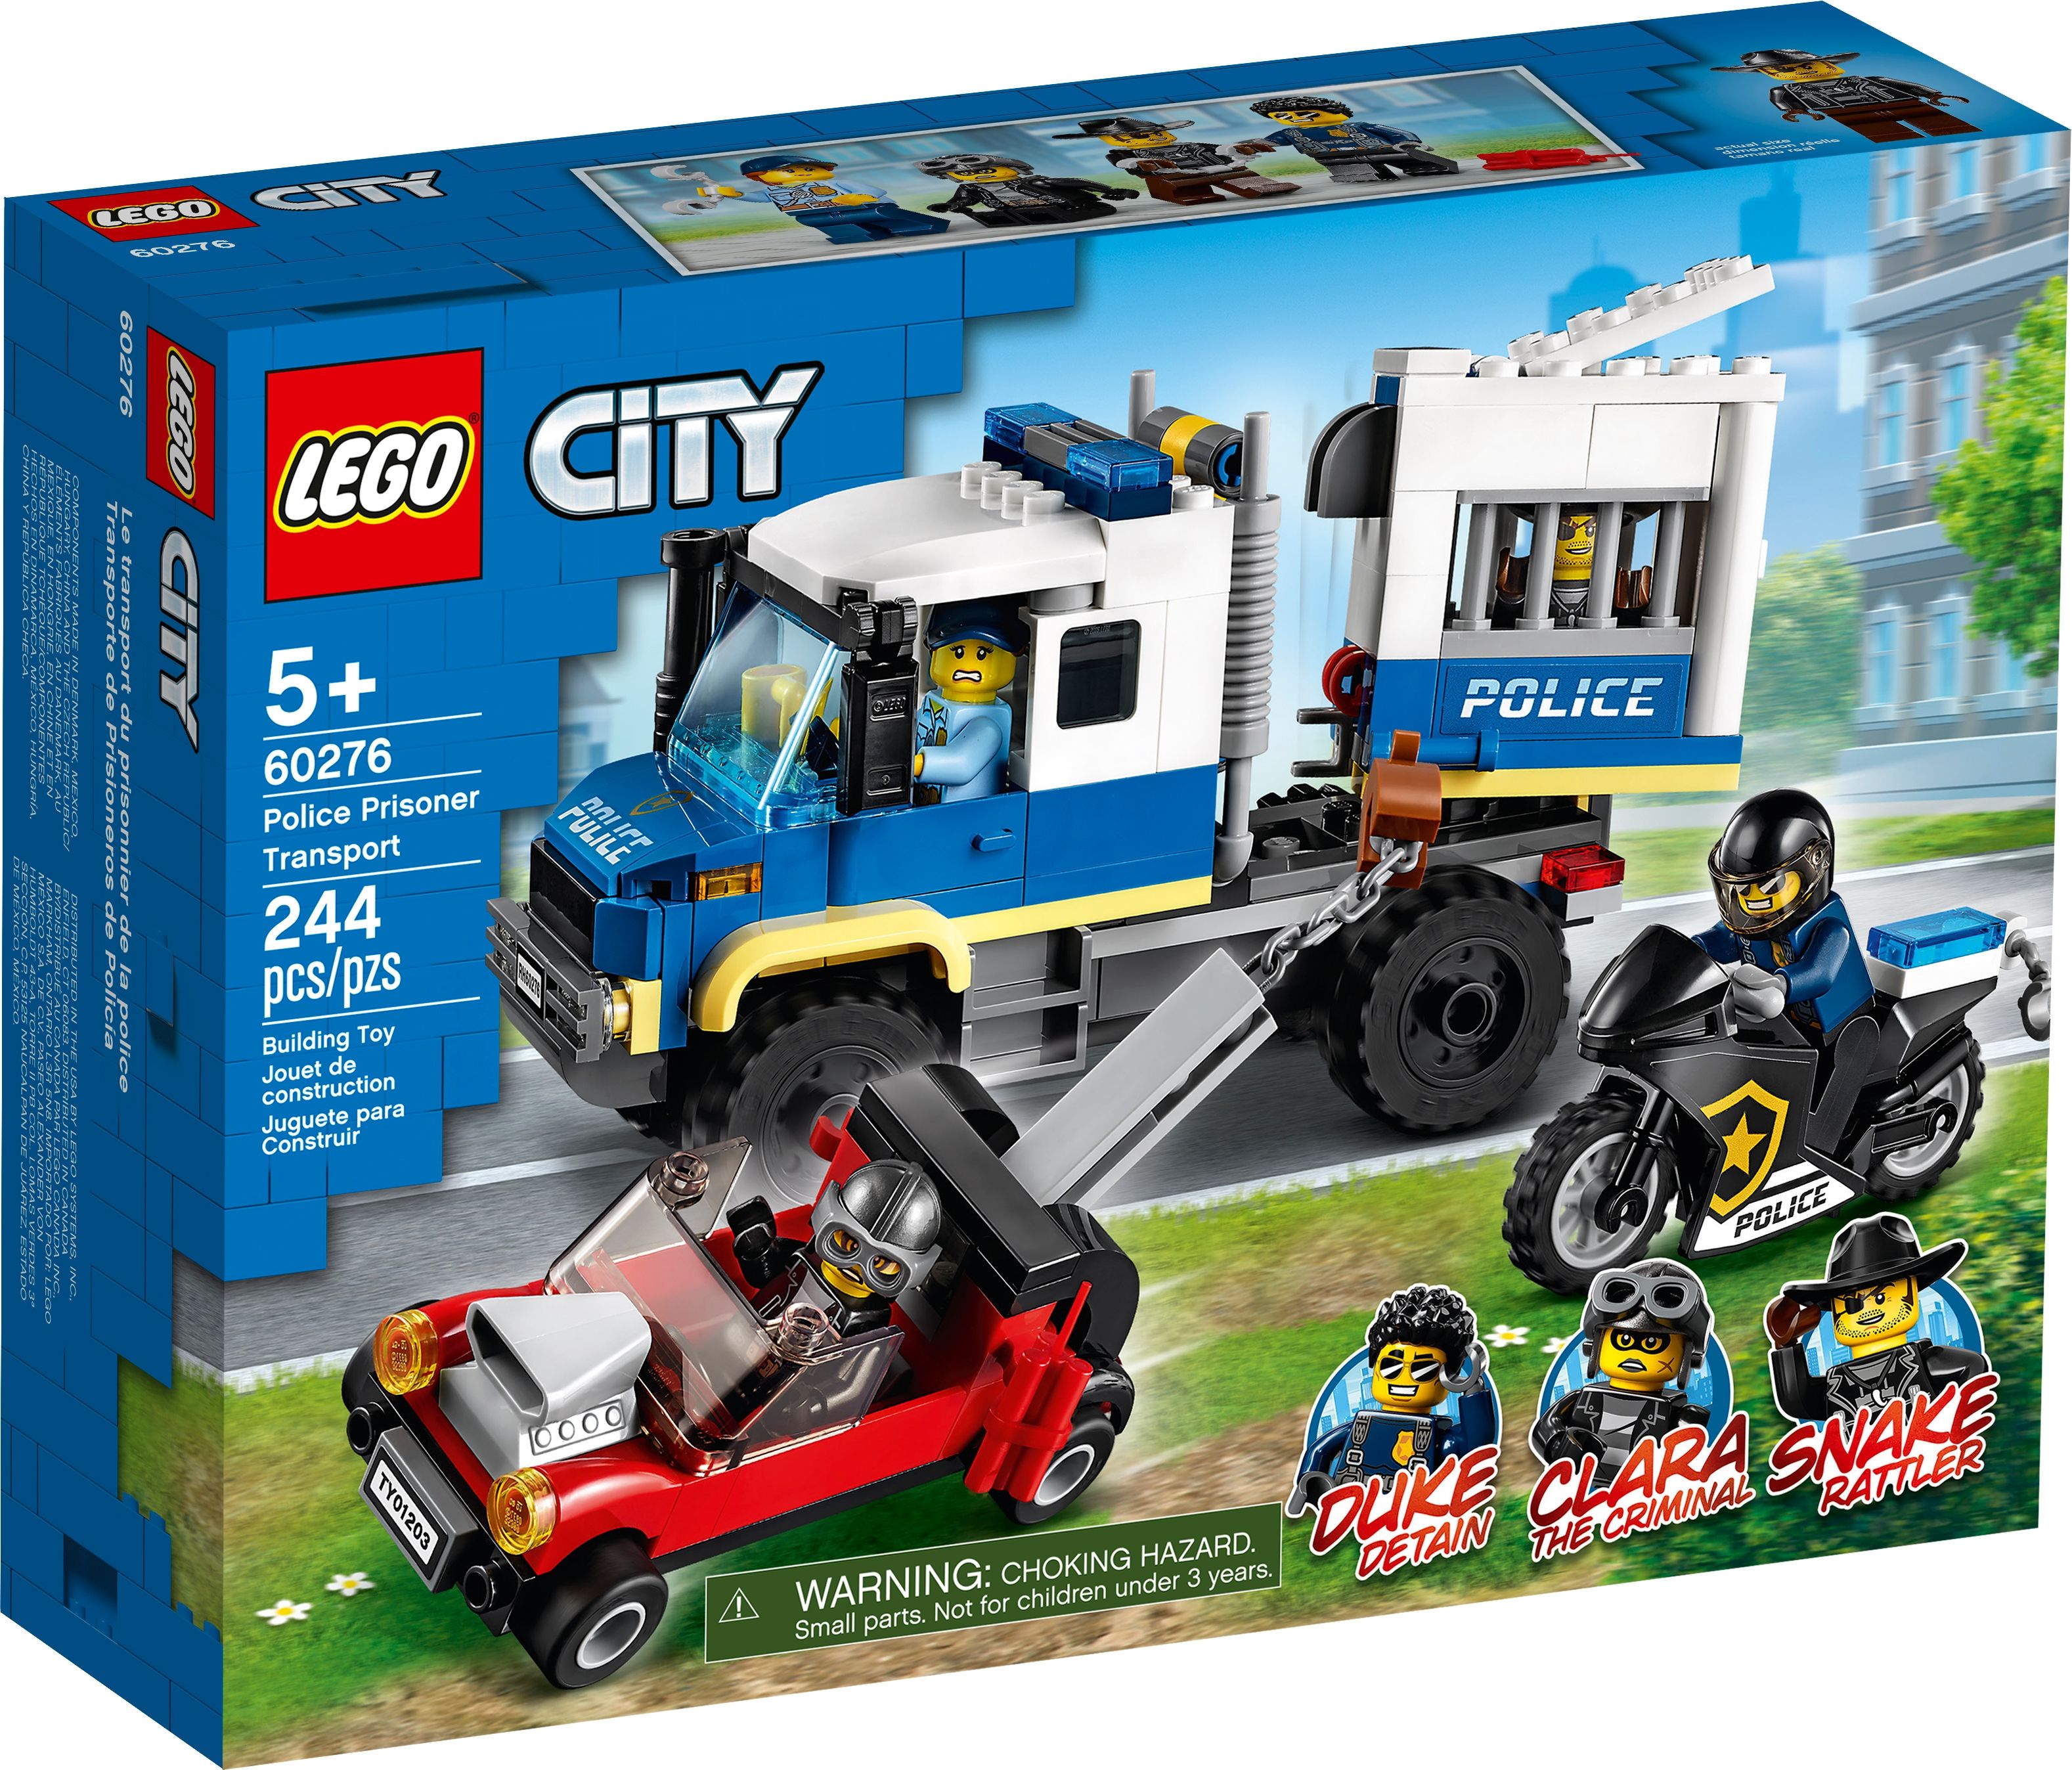 LEGO City 60276 Polizei Gefangenentransporter LEGO_60276_alt1.jpg